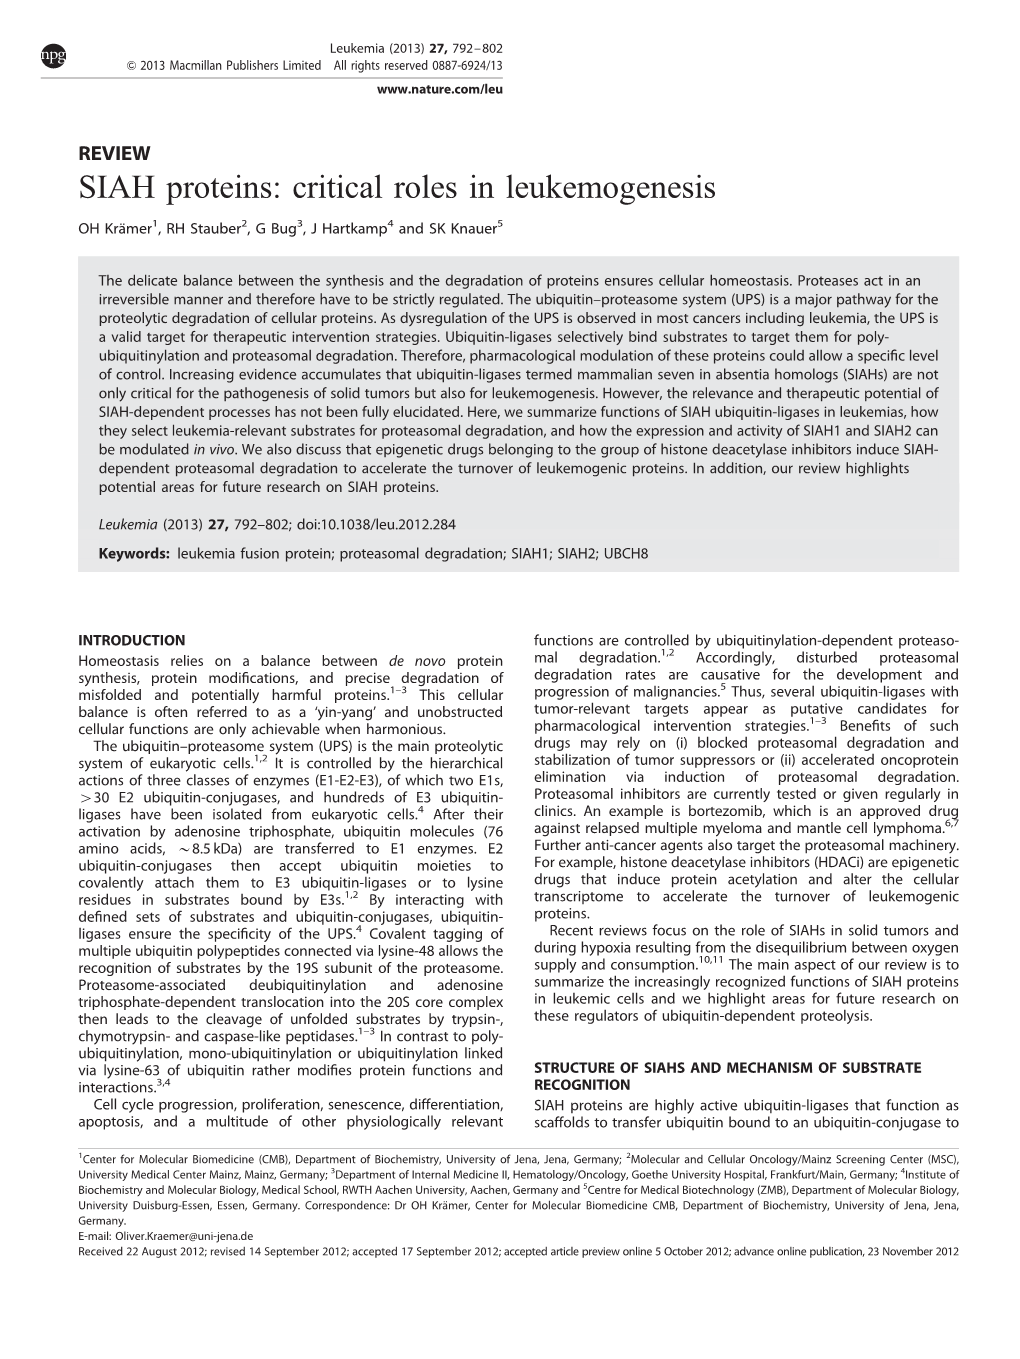 SIAH Proteins: Critical Roles in Leukemogenesis